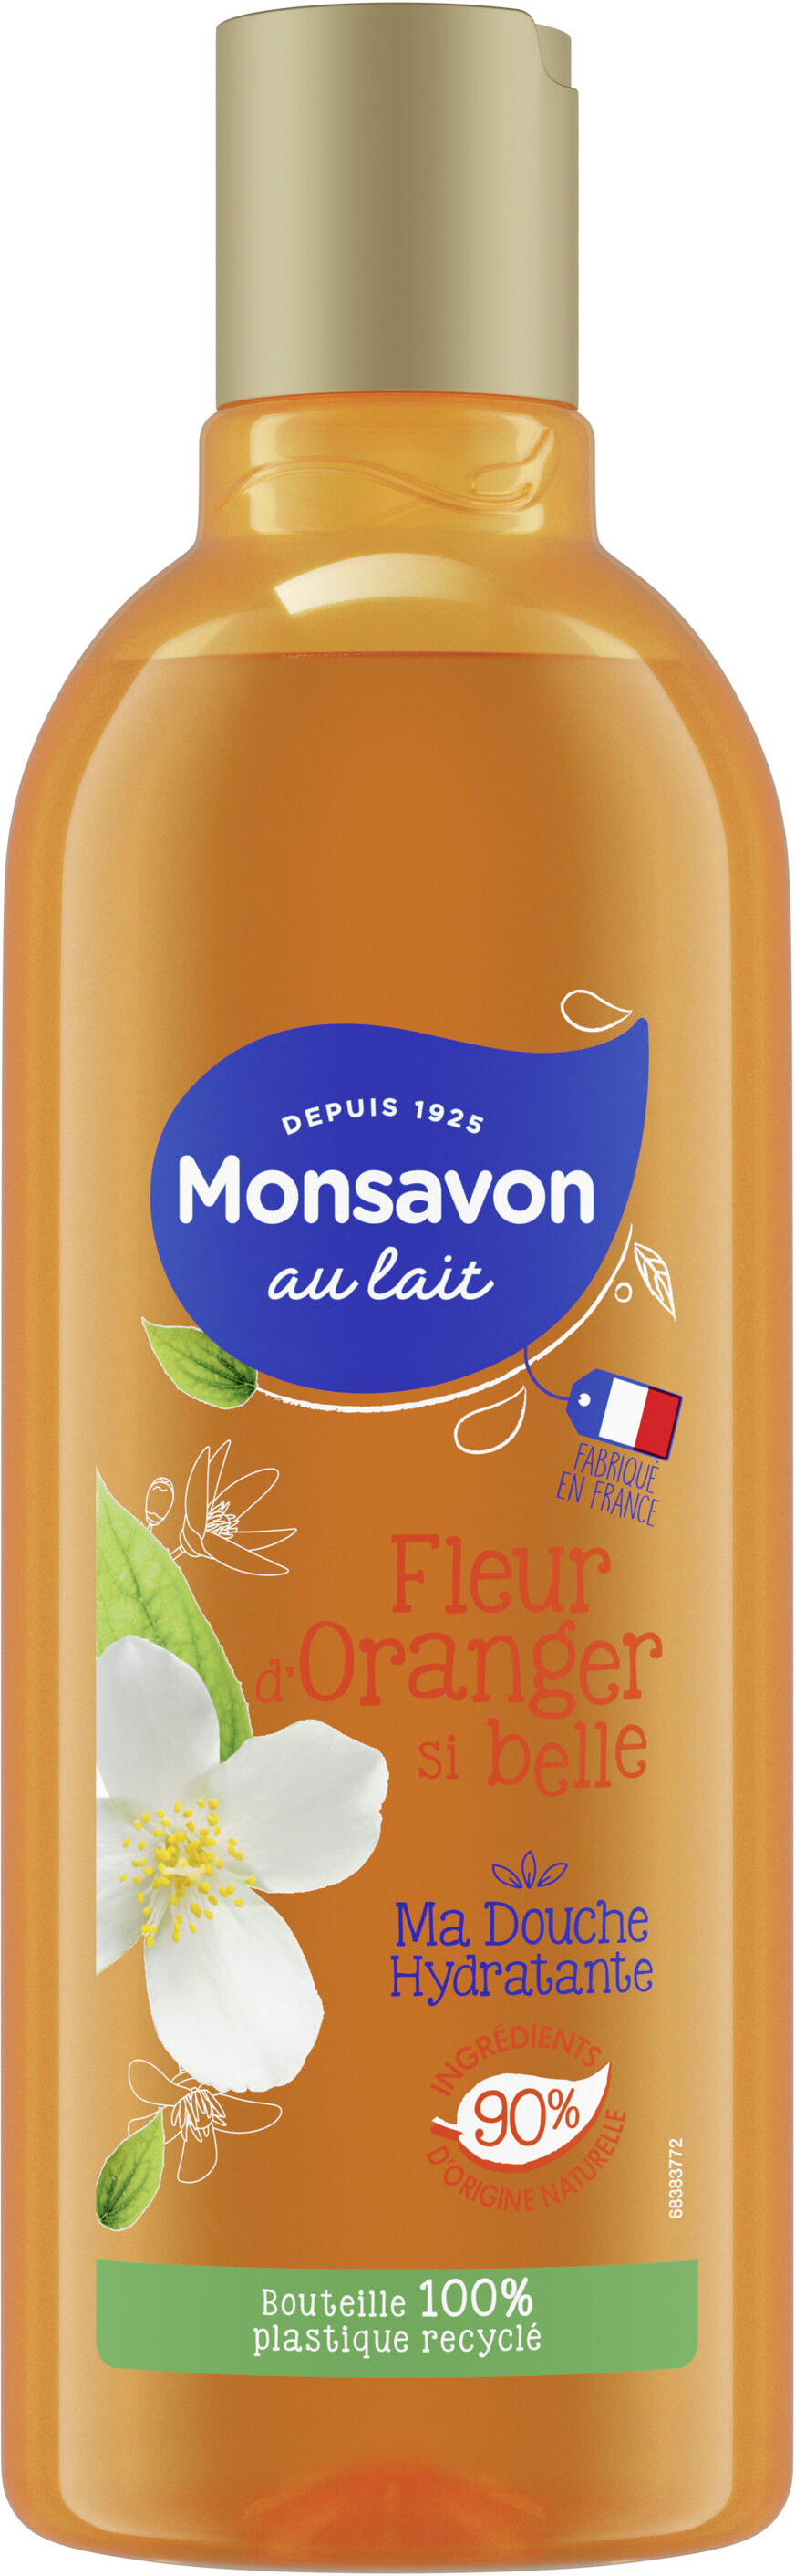 Monsavon Gel Douche Fleur d'oranger Si Belle 300ml - Produit - fr